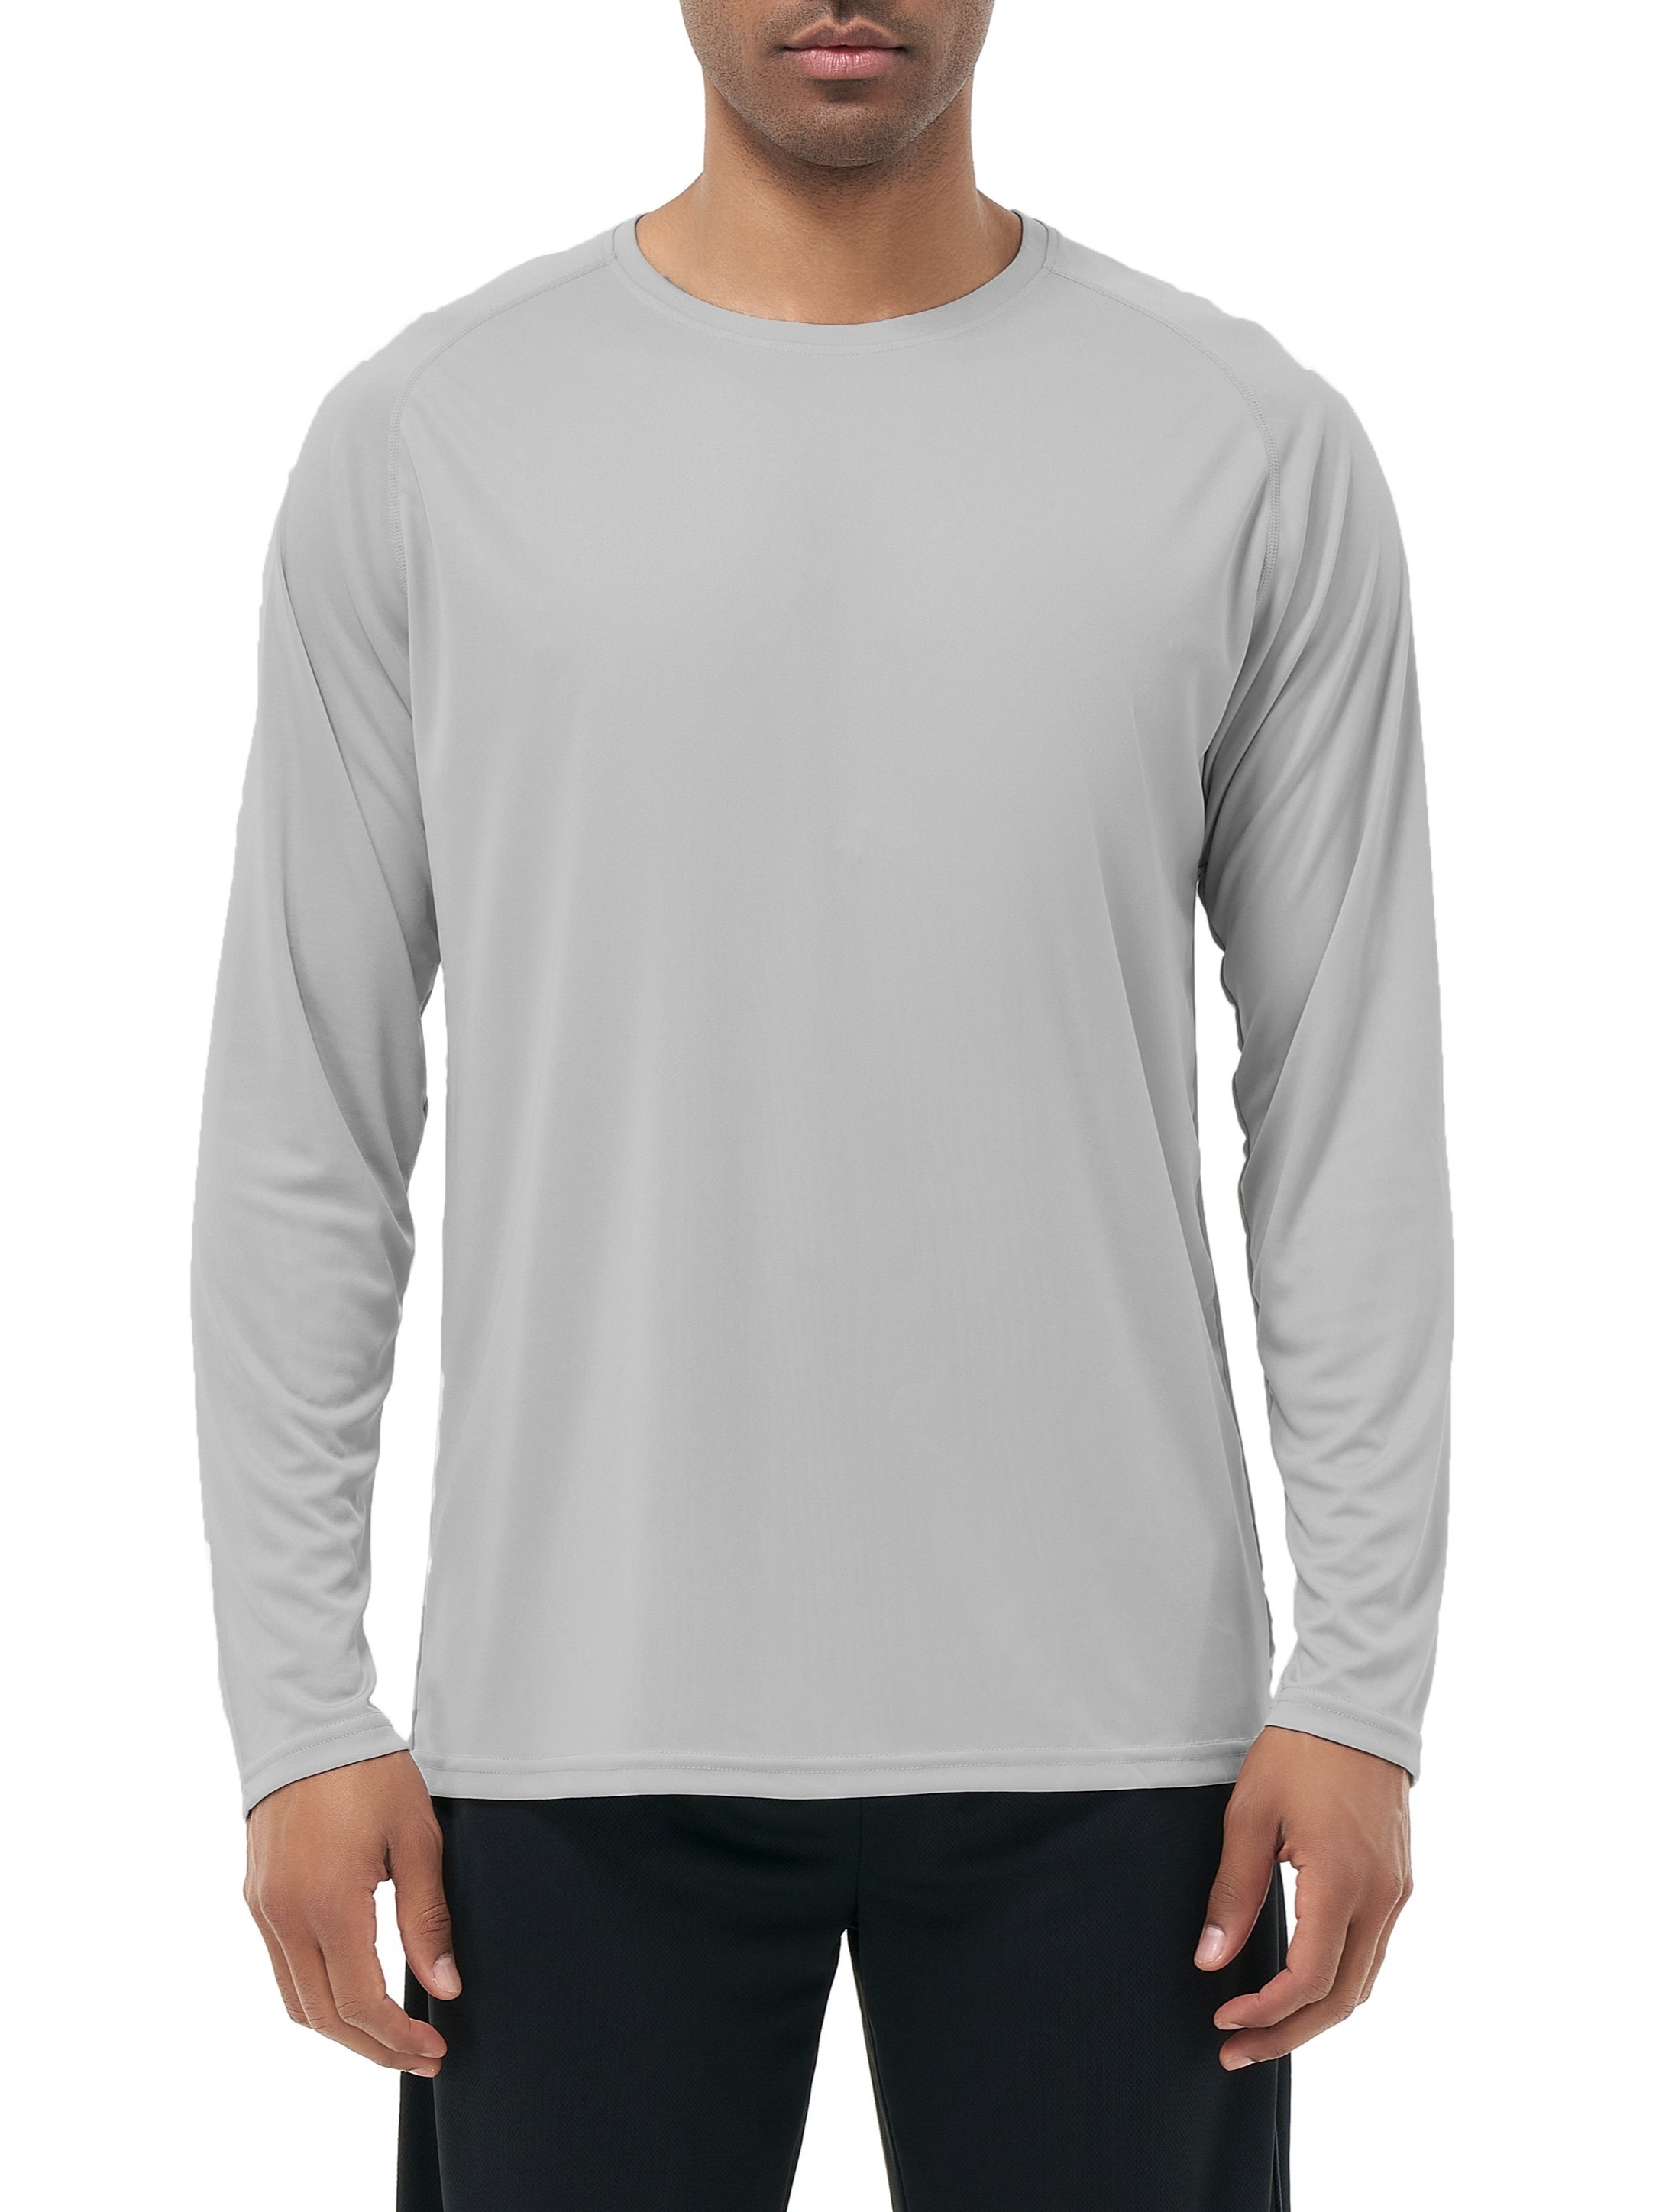 Men's Lightweight Upf 50+ Sun Protection T-Shirts Long Sleeve Shirts For Fishing Hiking Running